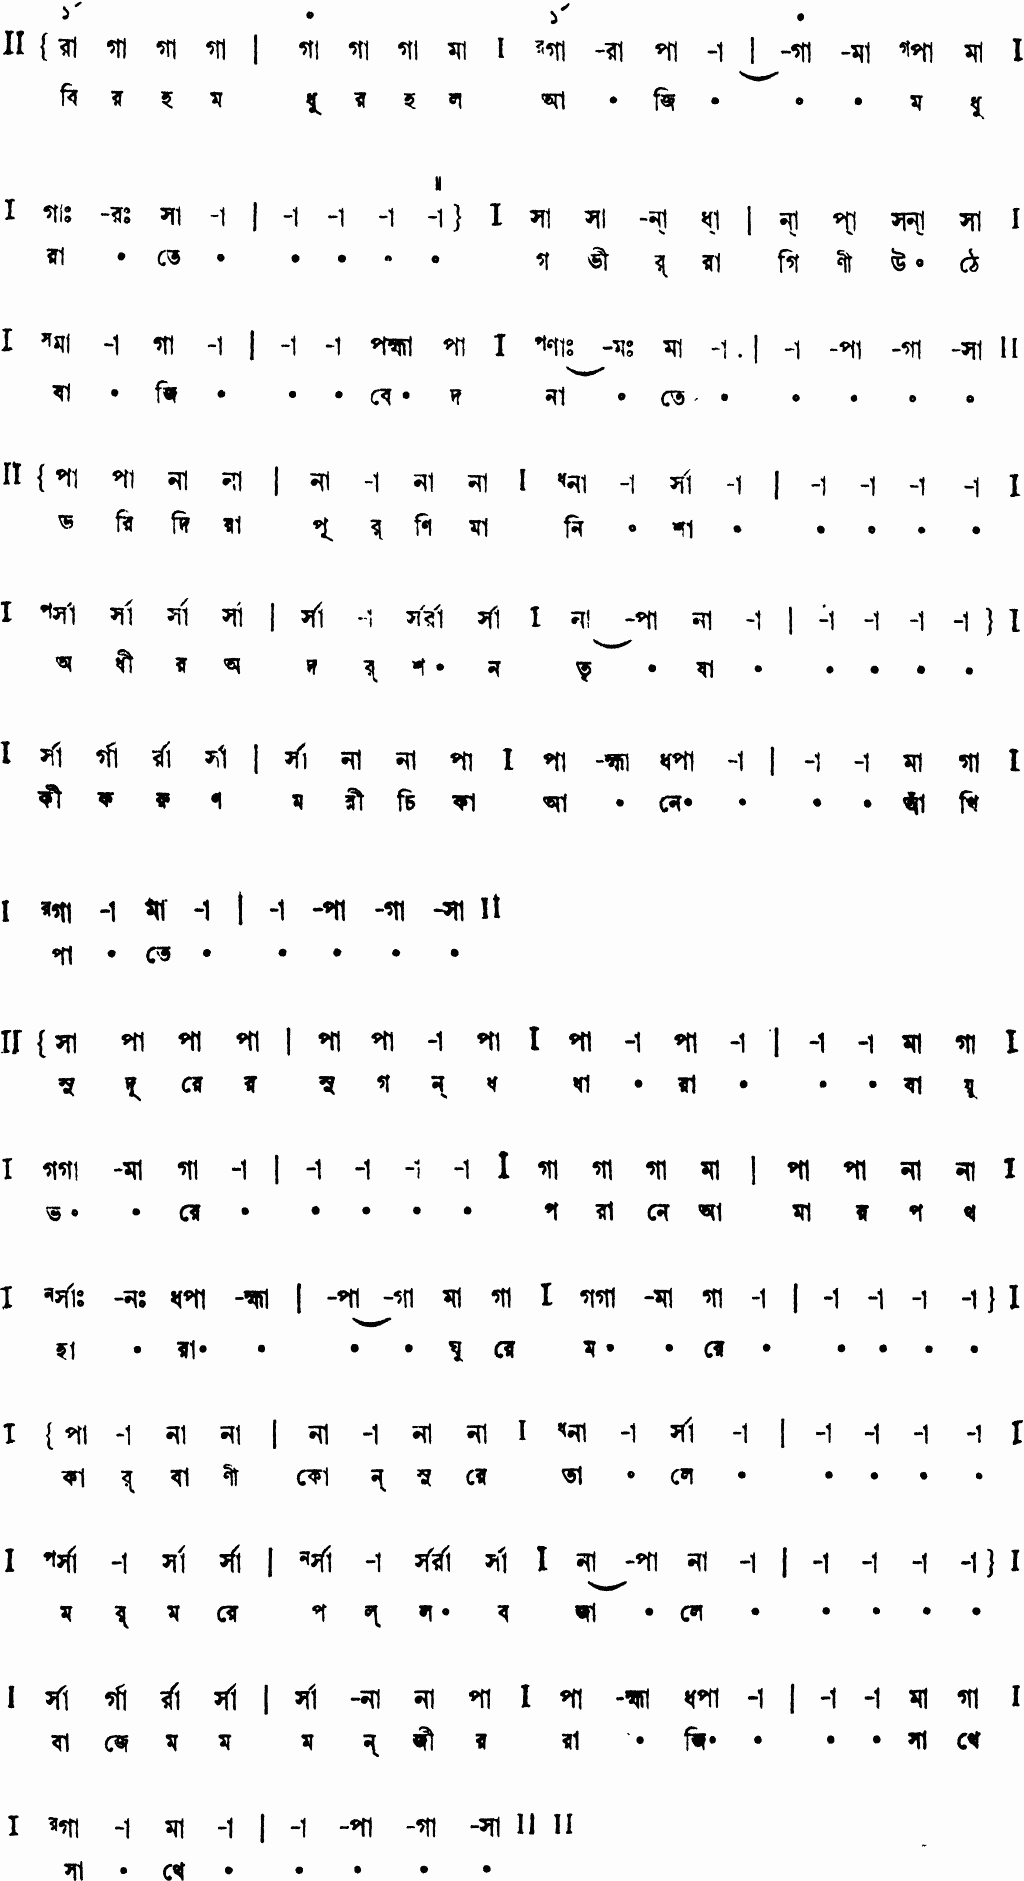 Notation biraha modhur holo